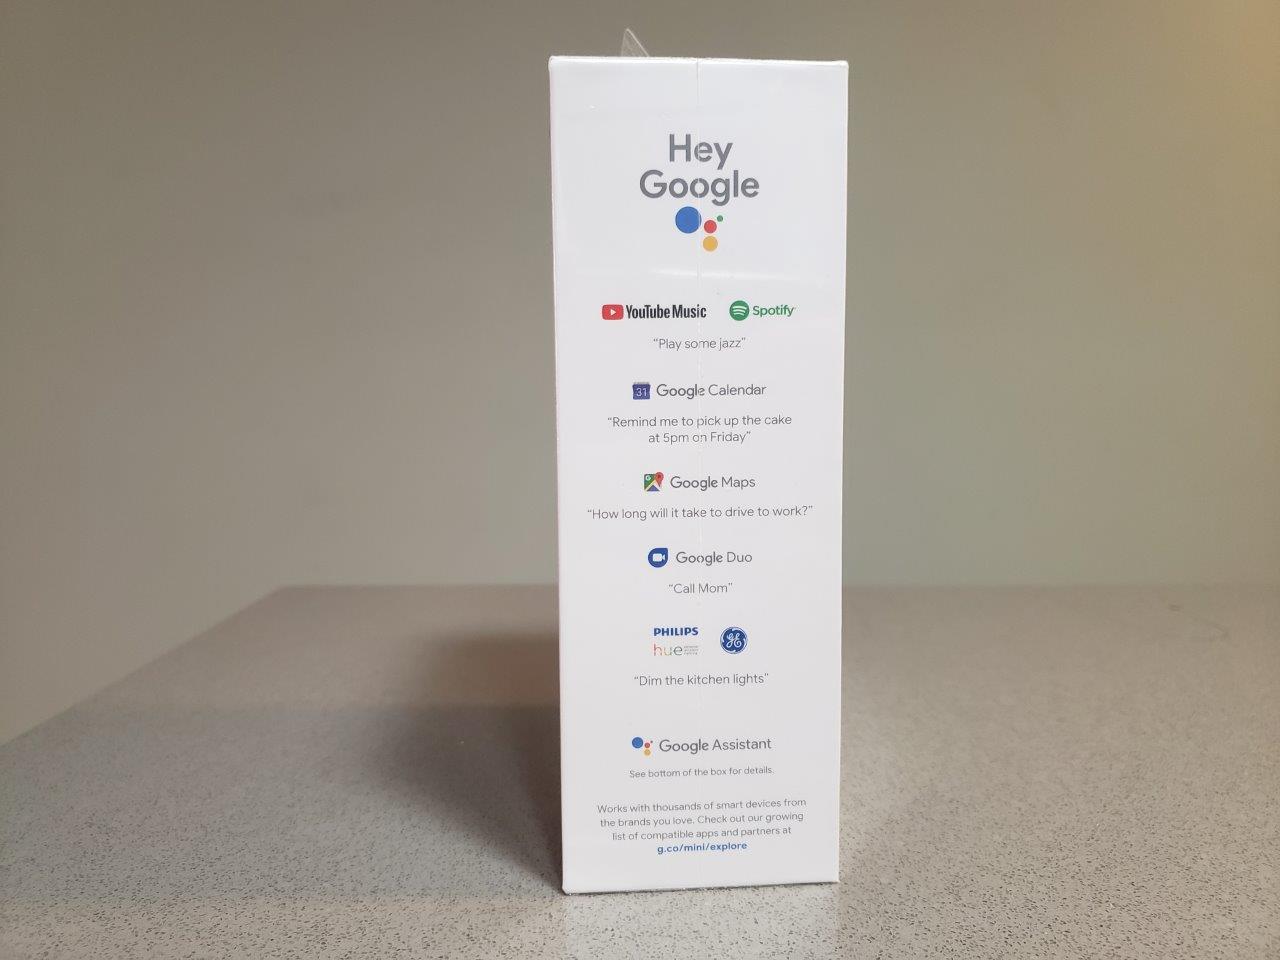 Google Nest Mini (2nd Generation) with Google Assistant (Chalk) 2019 VERSION - BRAND NEW!!!